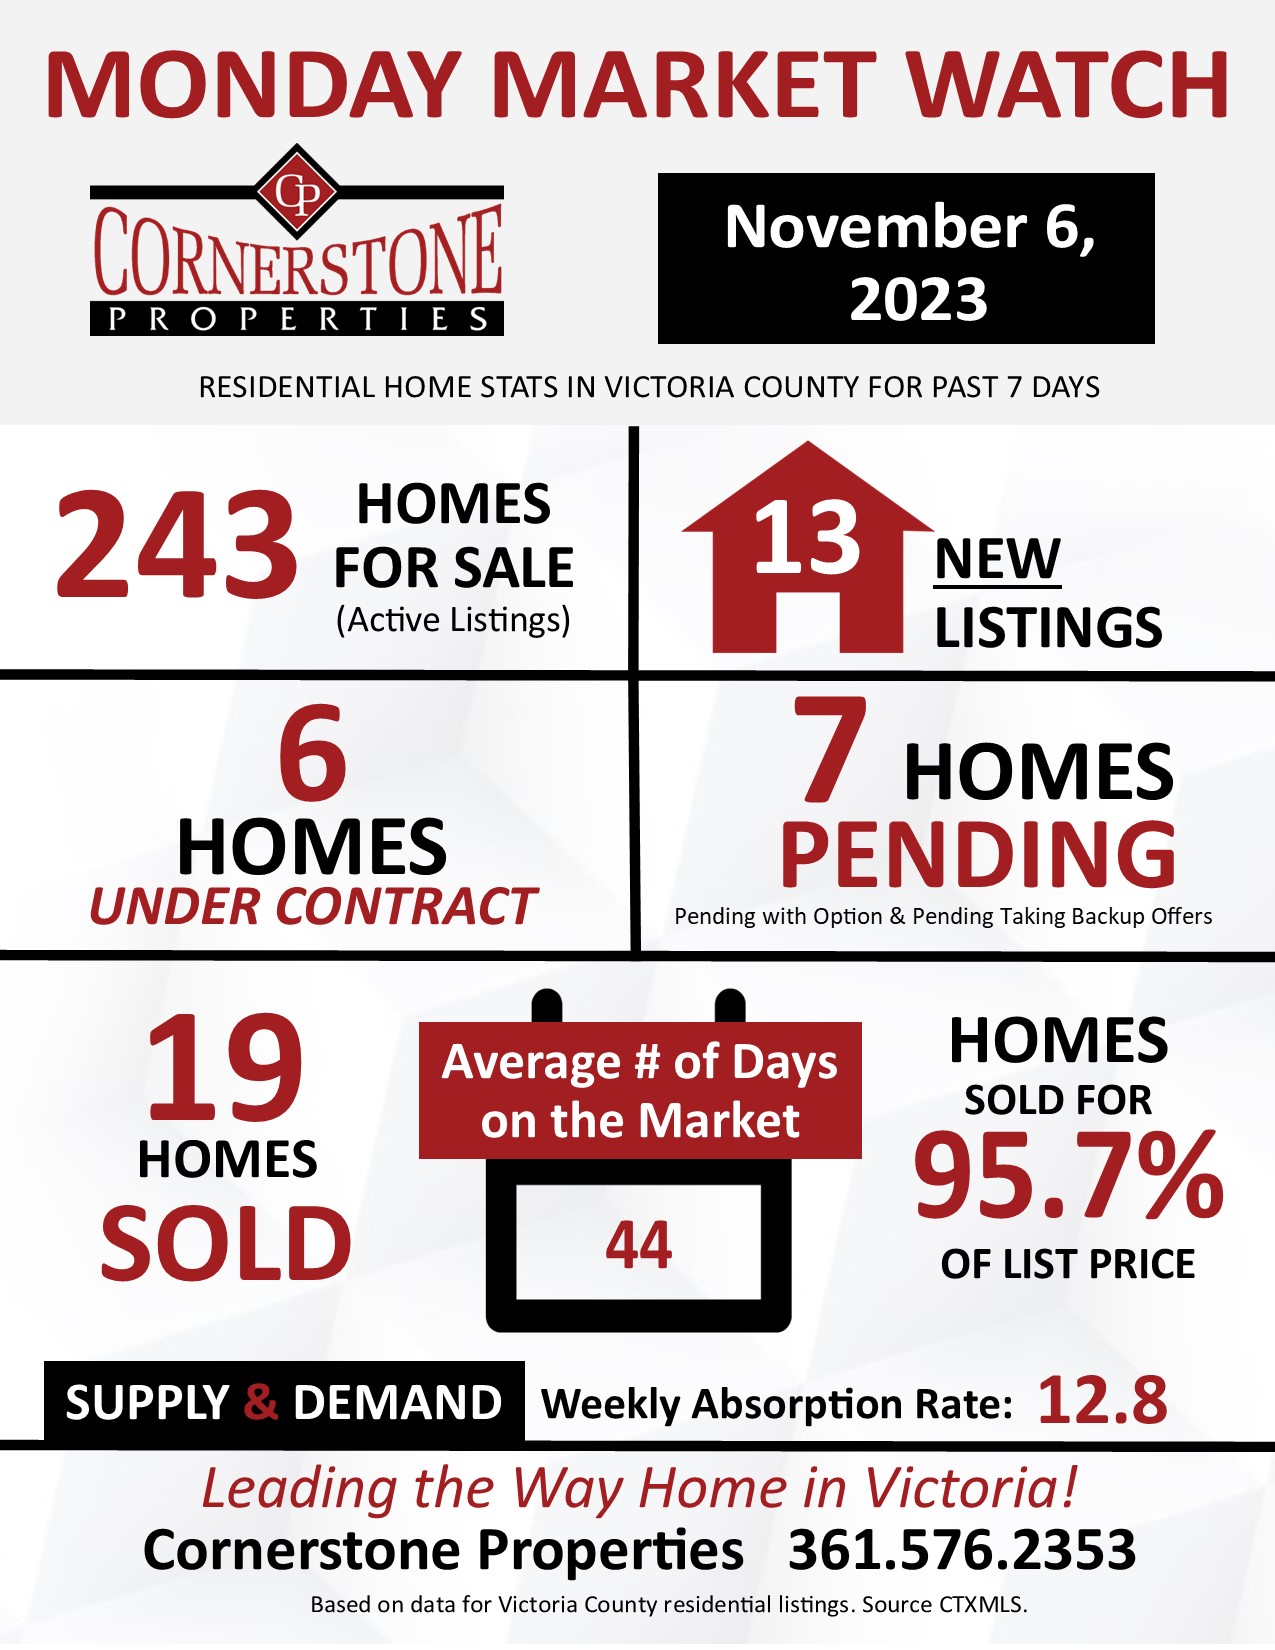 Home Sales in Victoria 